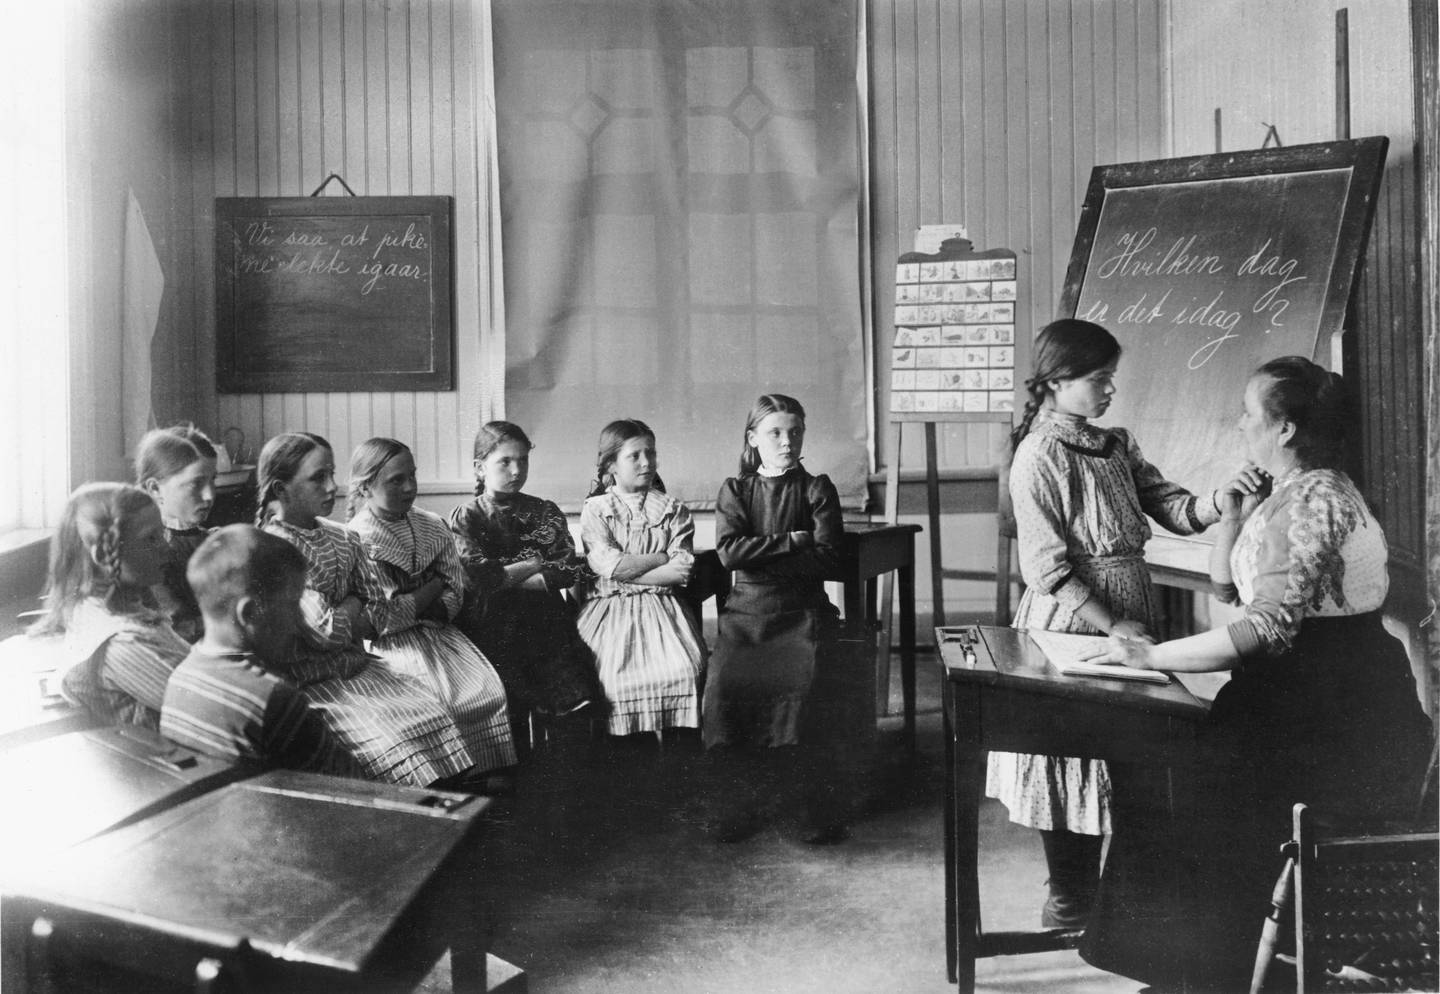 Kristiania offentlige skole for døve ca. 1922. Skolen lå i årene 1903-1934 i de gamle lokalene til «Lindern Institutt for Aandssvage Gutter» i Ullevålsveien 72 hvor Norges veterinærhøgskole senere ble etablert.